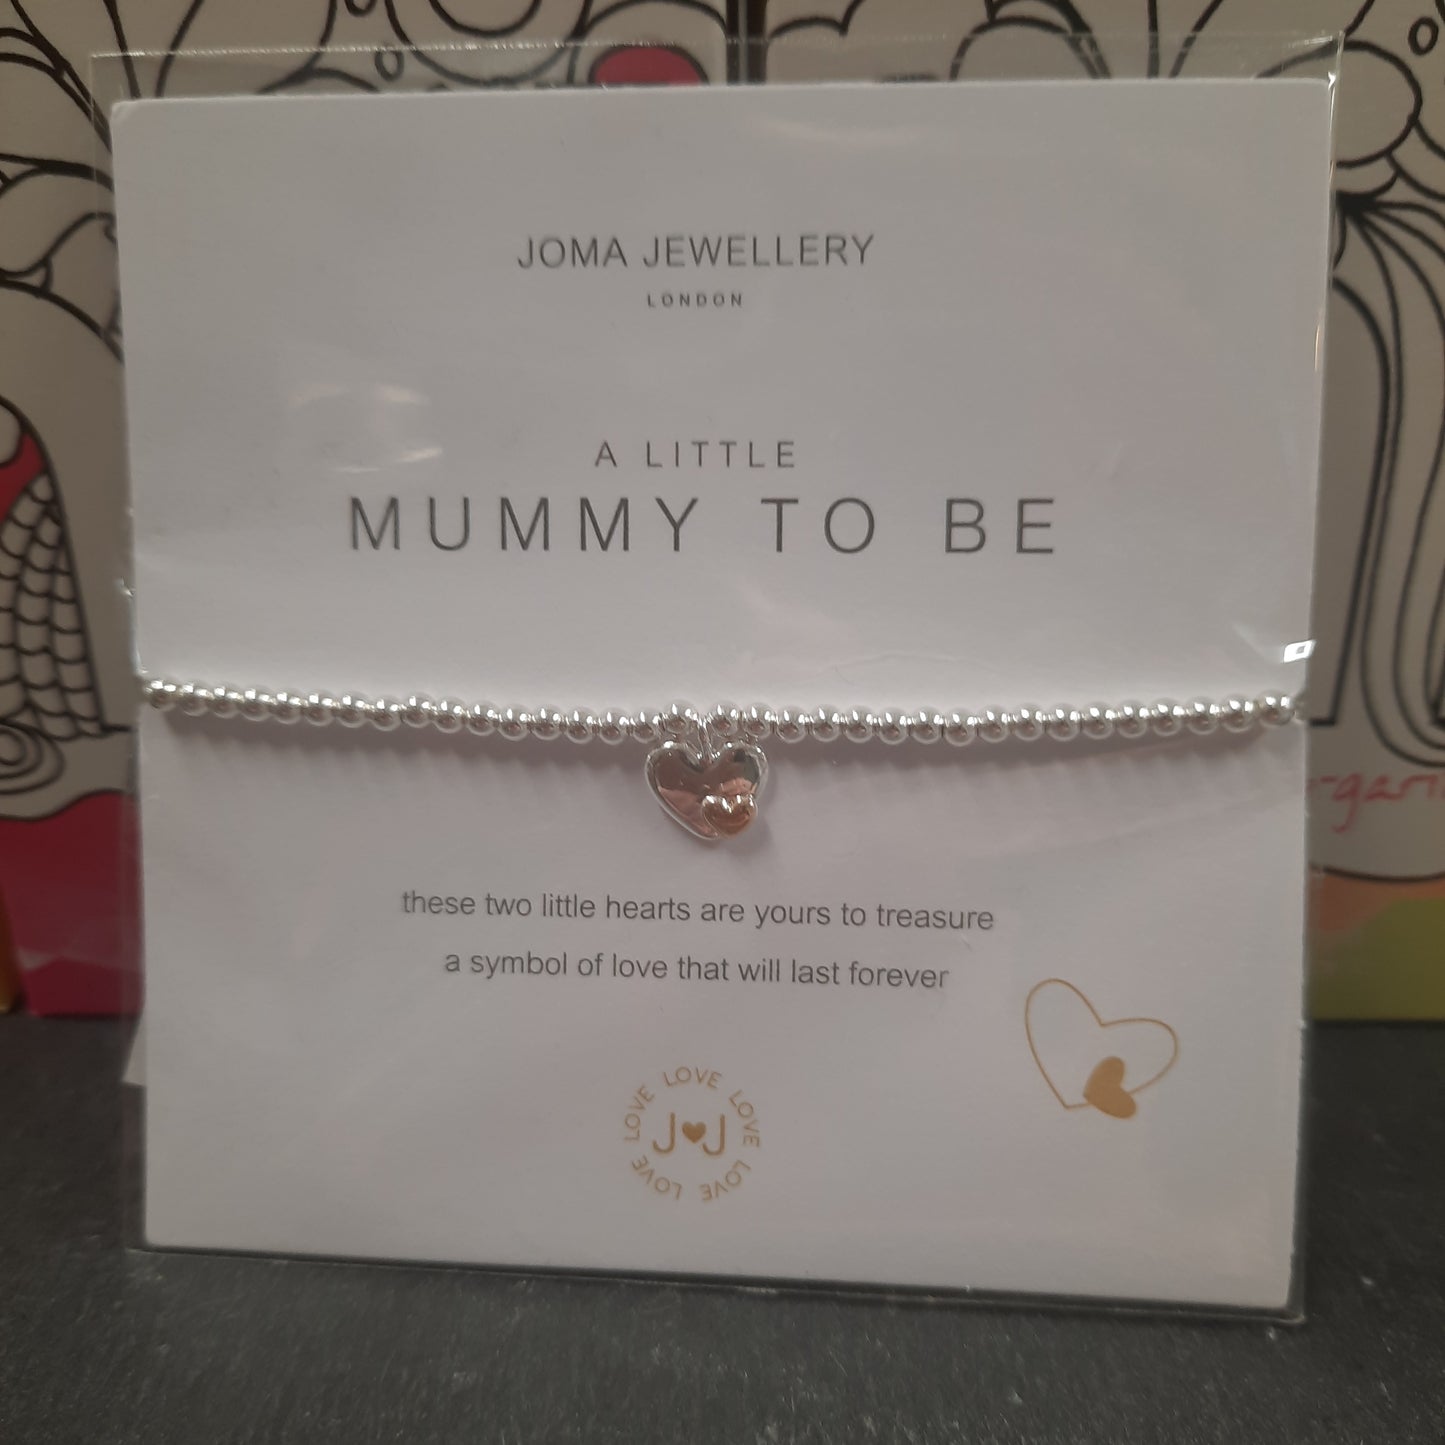 JOMA...Mummy To Be